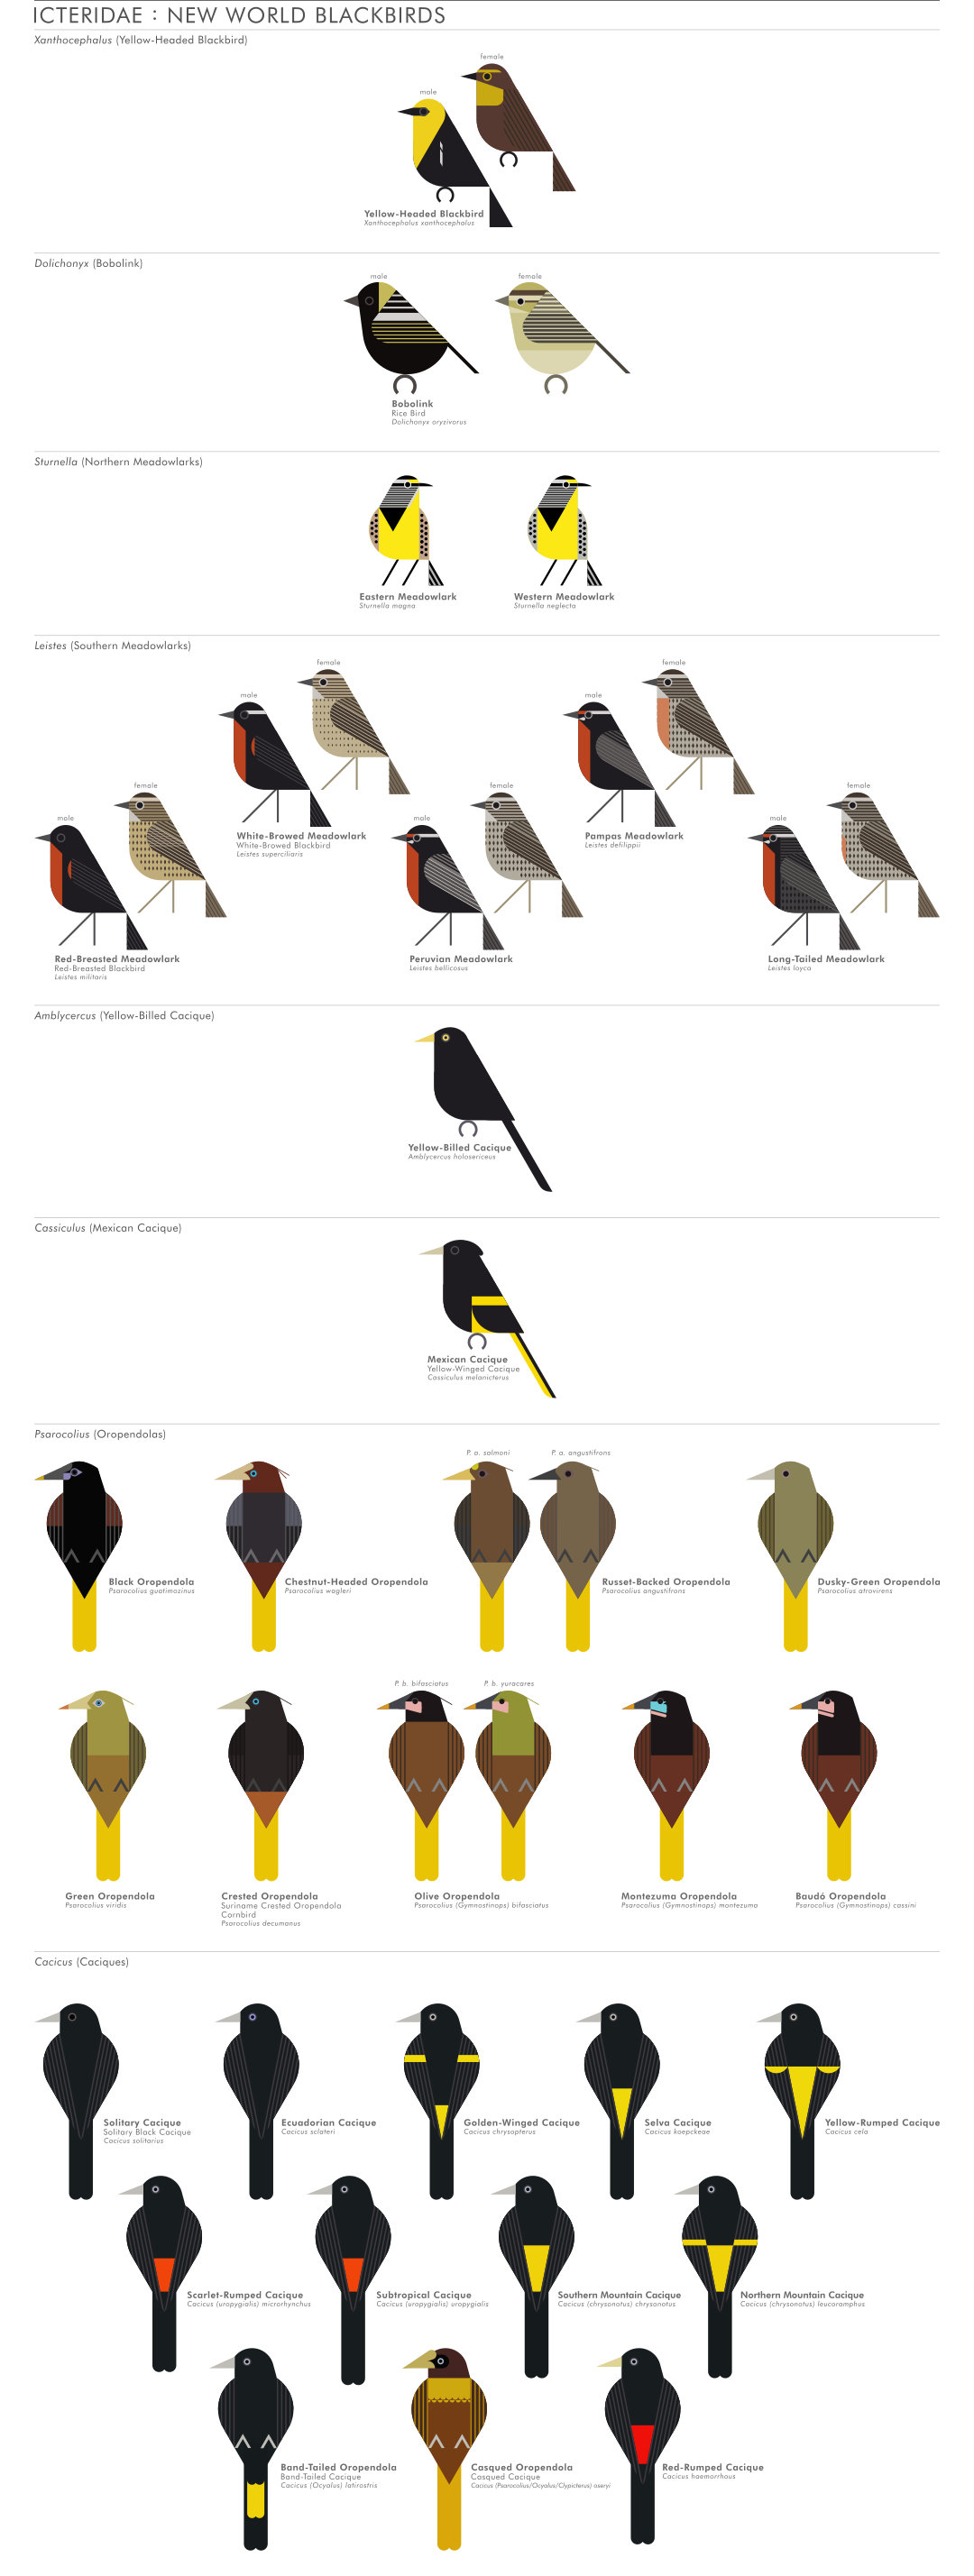 scott partridge - AVE - avian vector encyclopedia - blackbirds - bird vector art